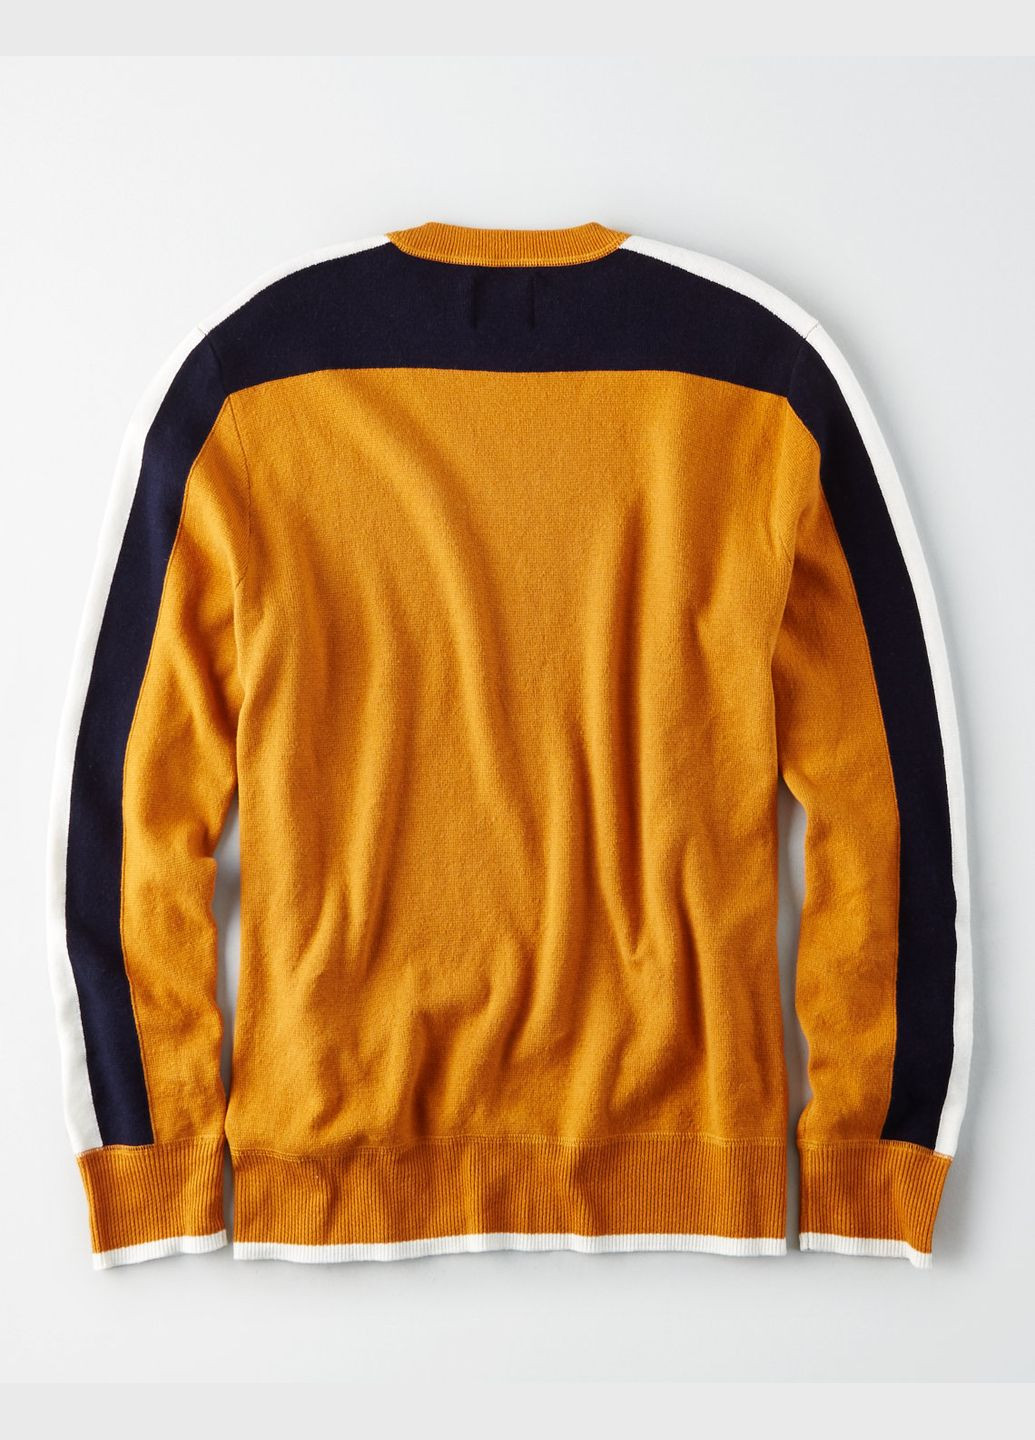 Оранжевый демисезонный свитер мужской - свитер ae4567m American Eagle